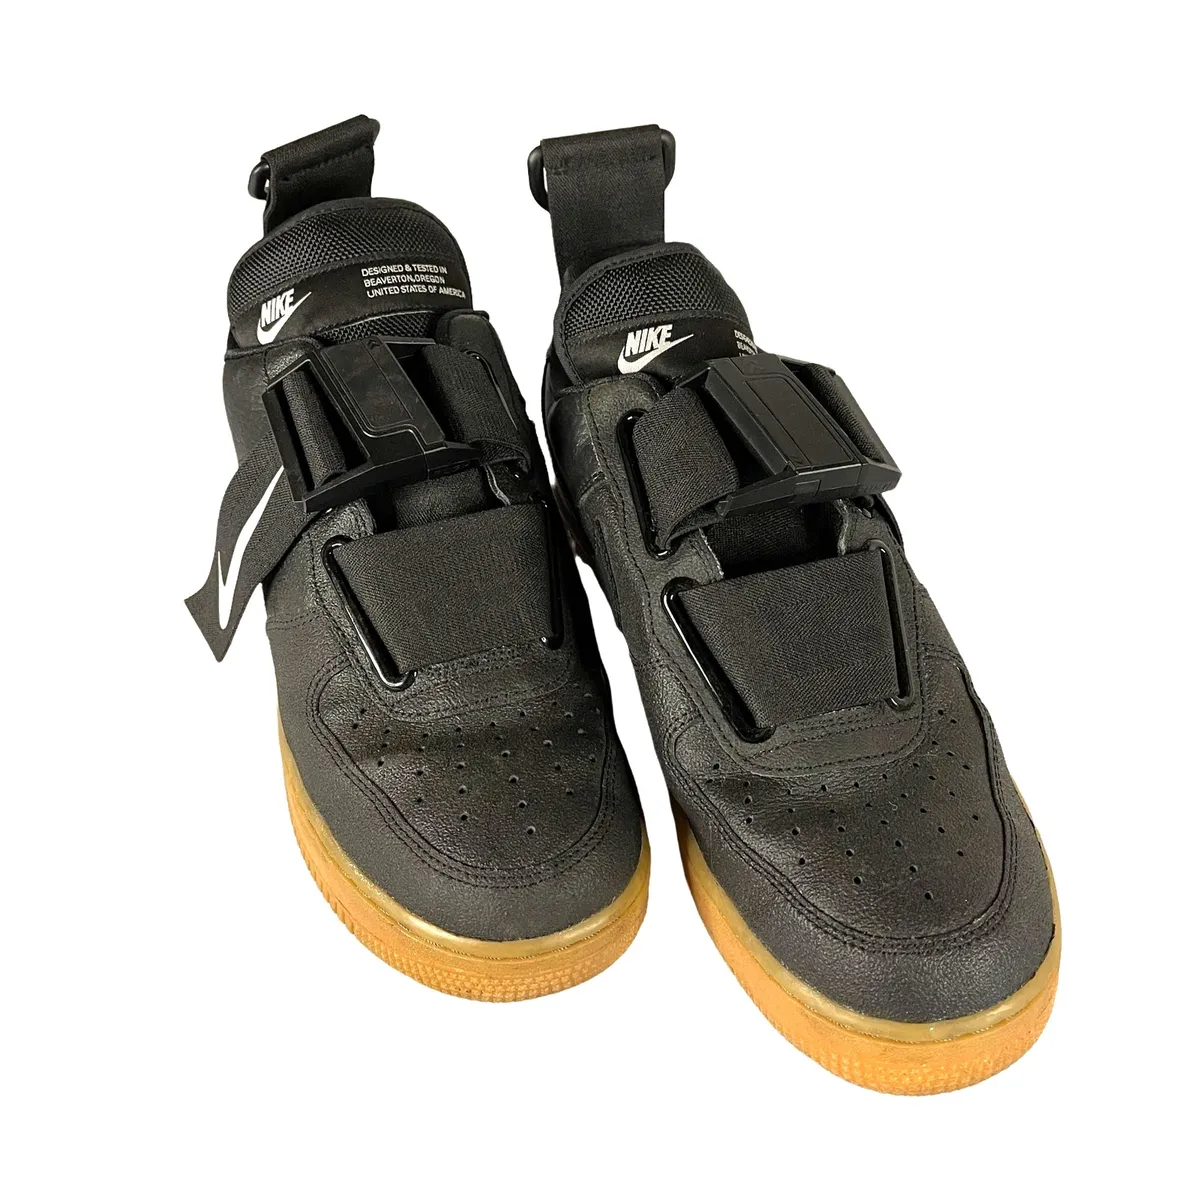 Nike Sneakers Black Gum Strap Air Force 1 Utility Men Size 7.5 A01531-002 | eBay